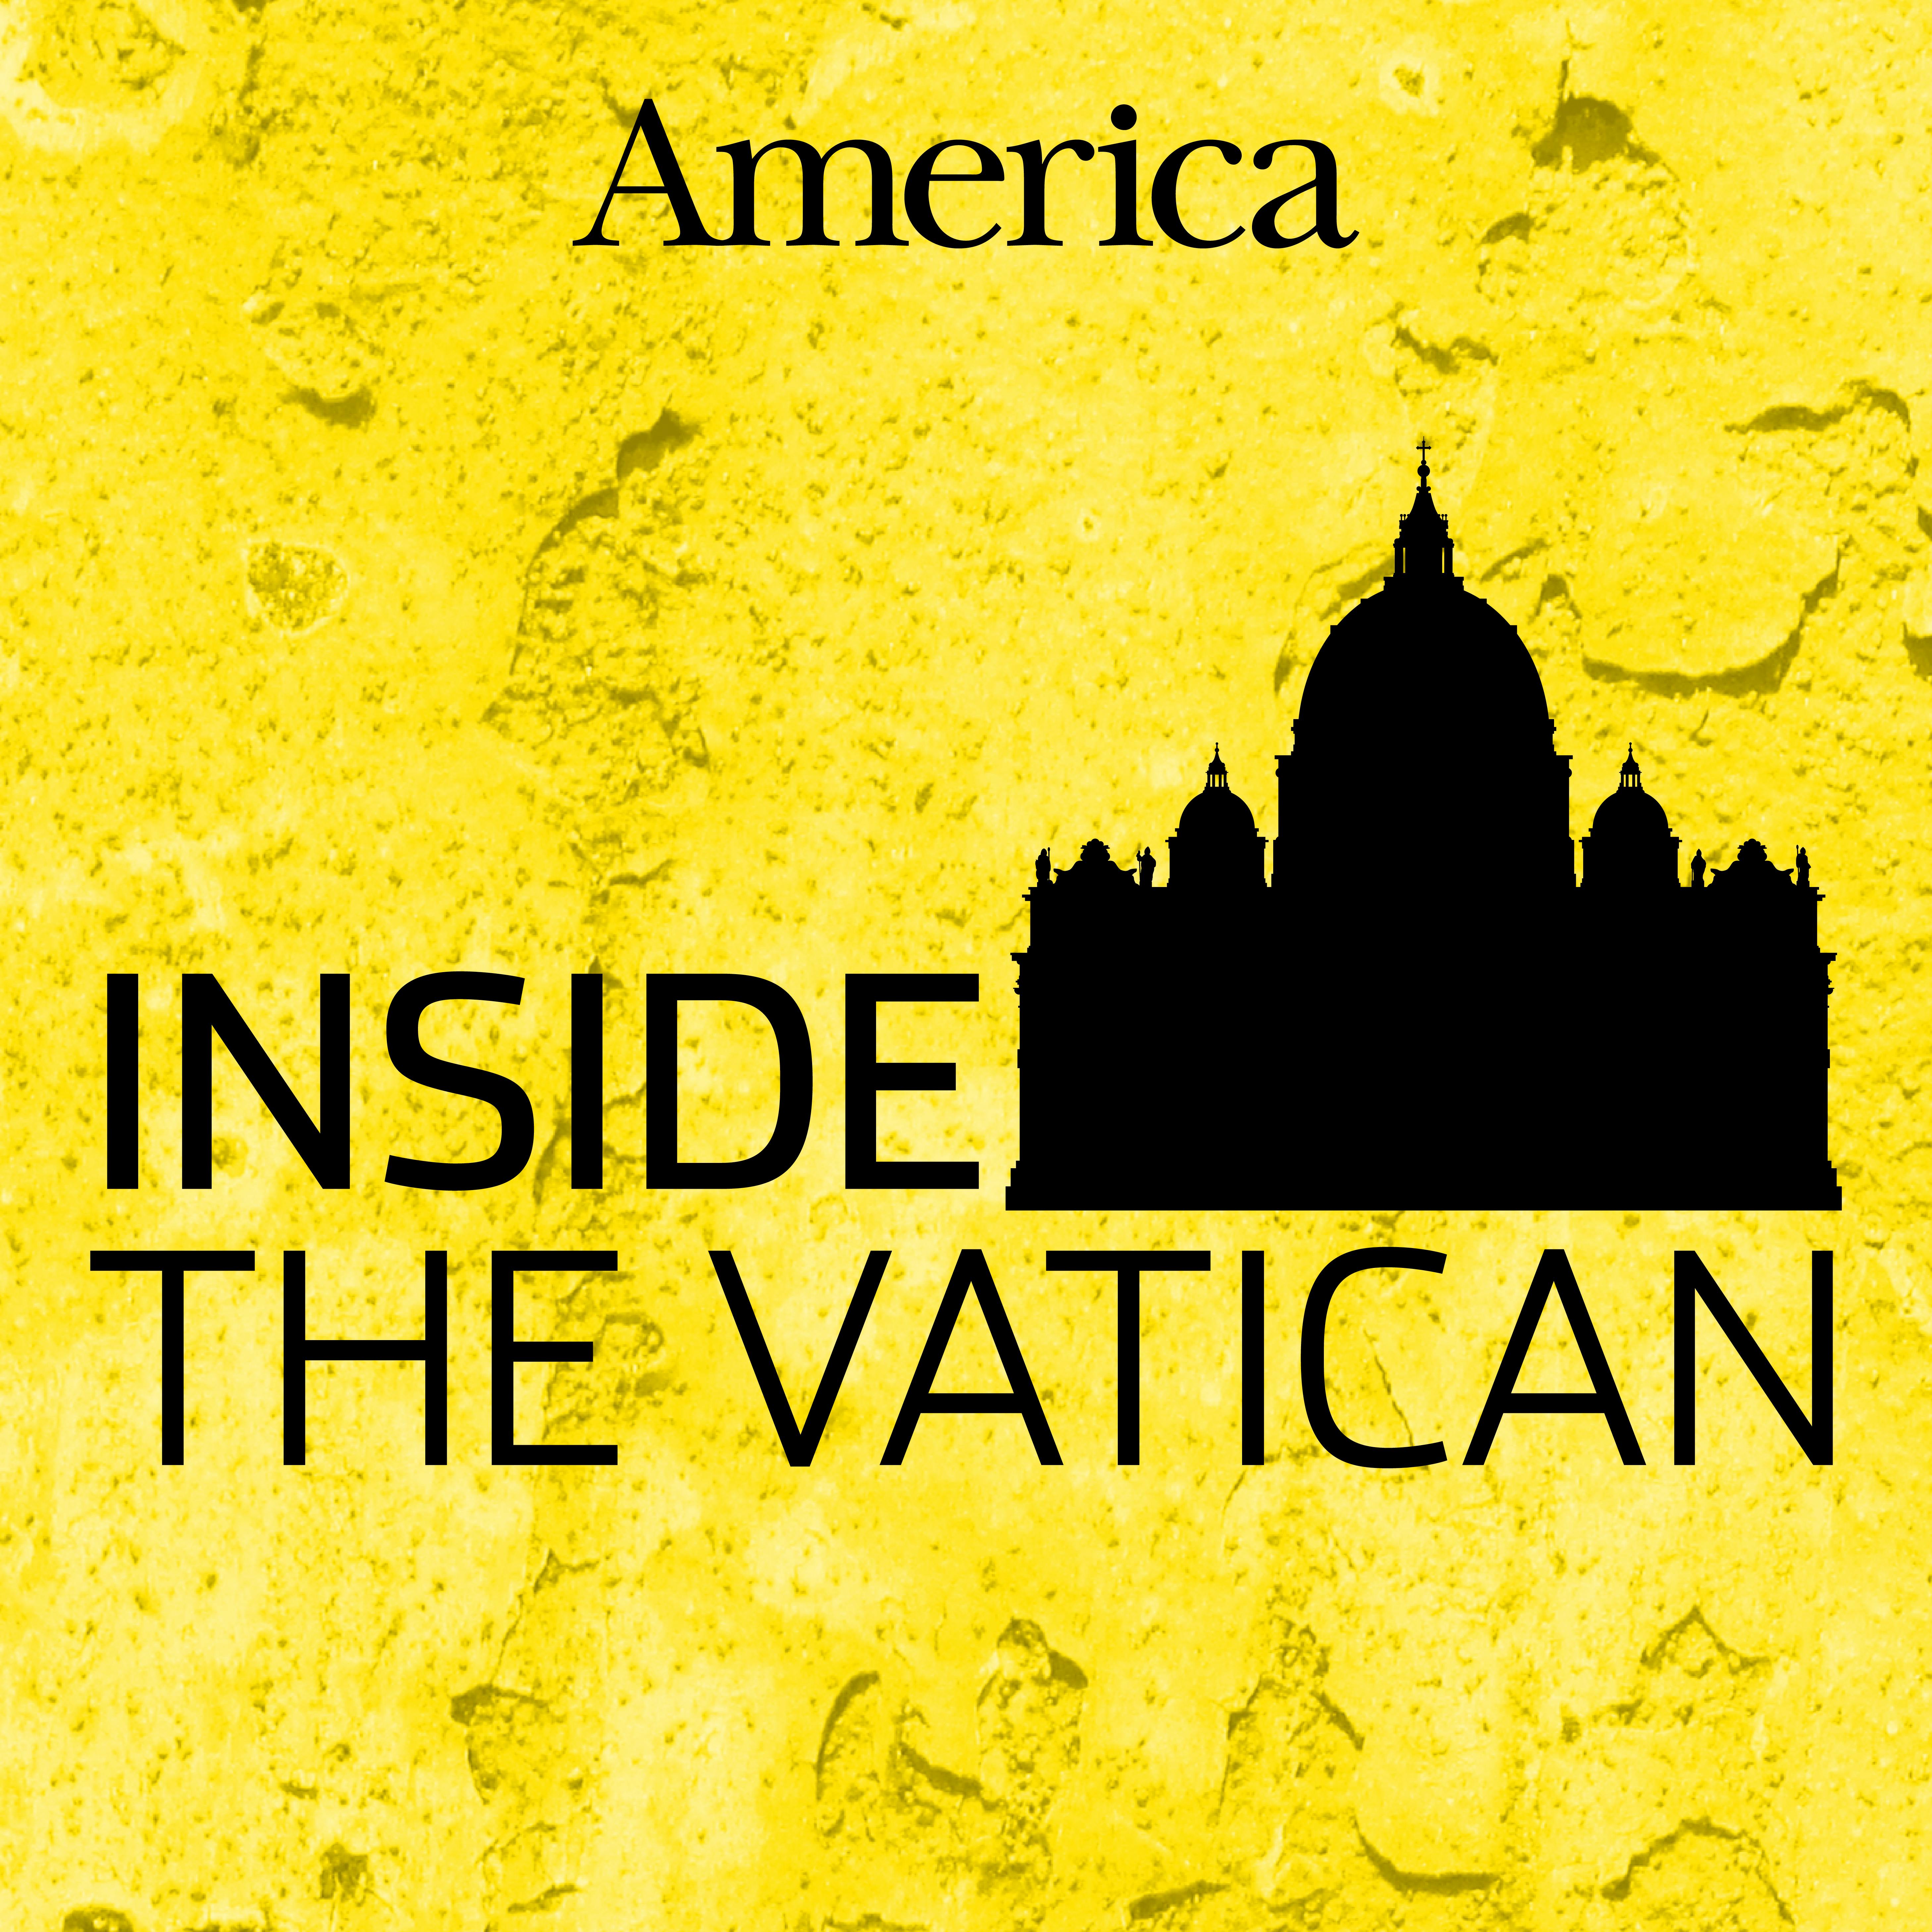 Update: Vatican investigates ‘opaque’ London real estate deal